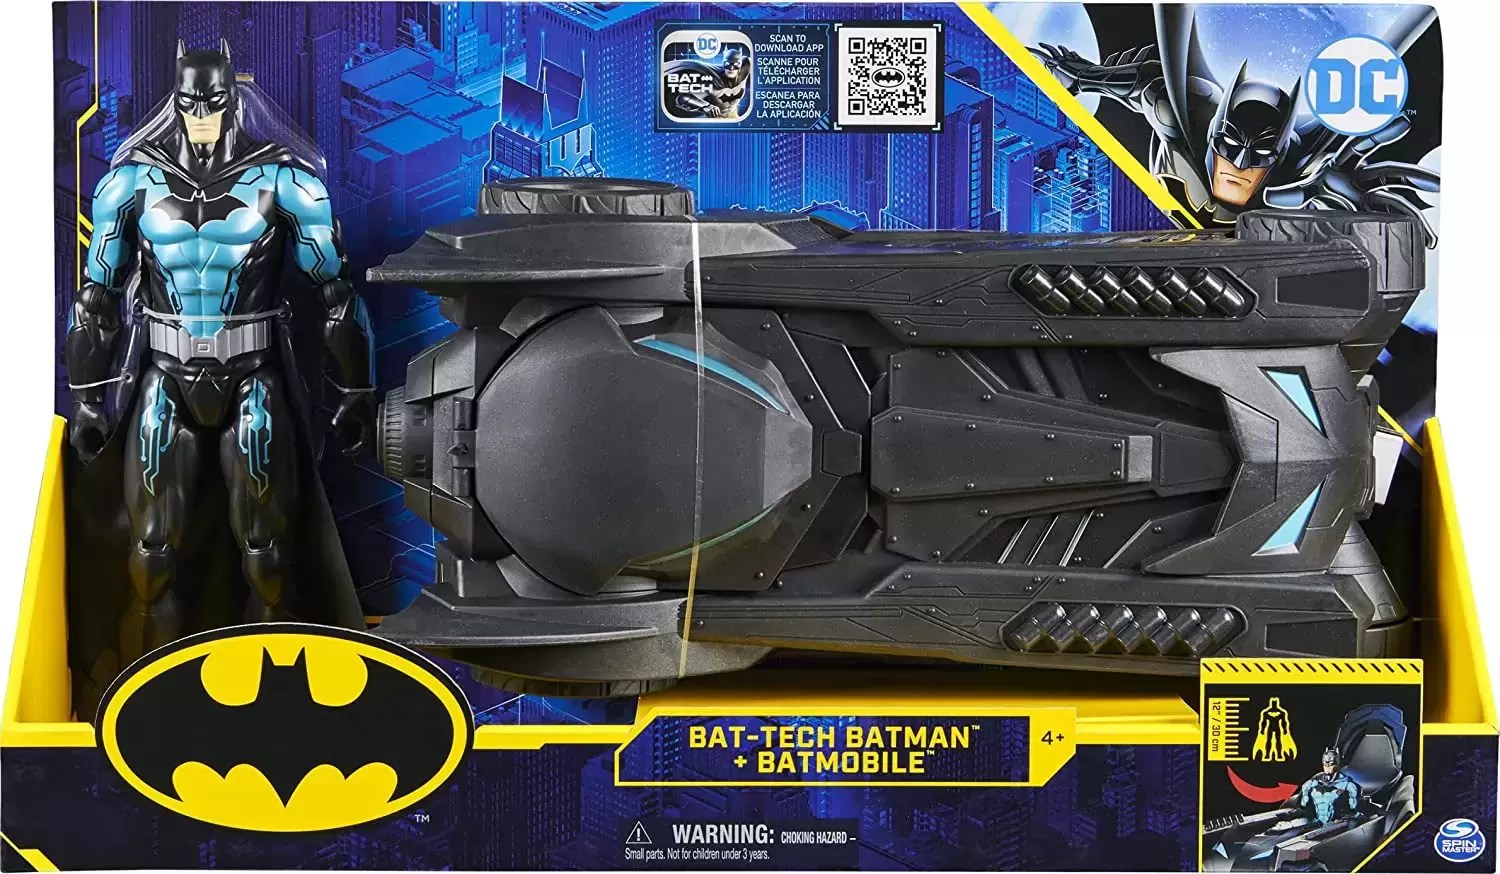 Bat-Tech Batman & Batmobile - DC by Spin Master action figure